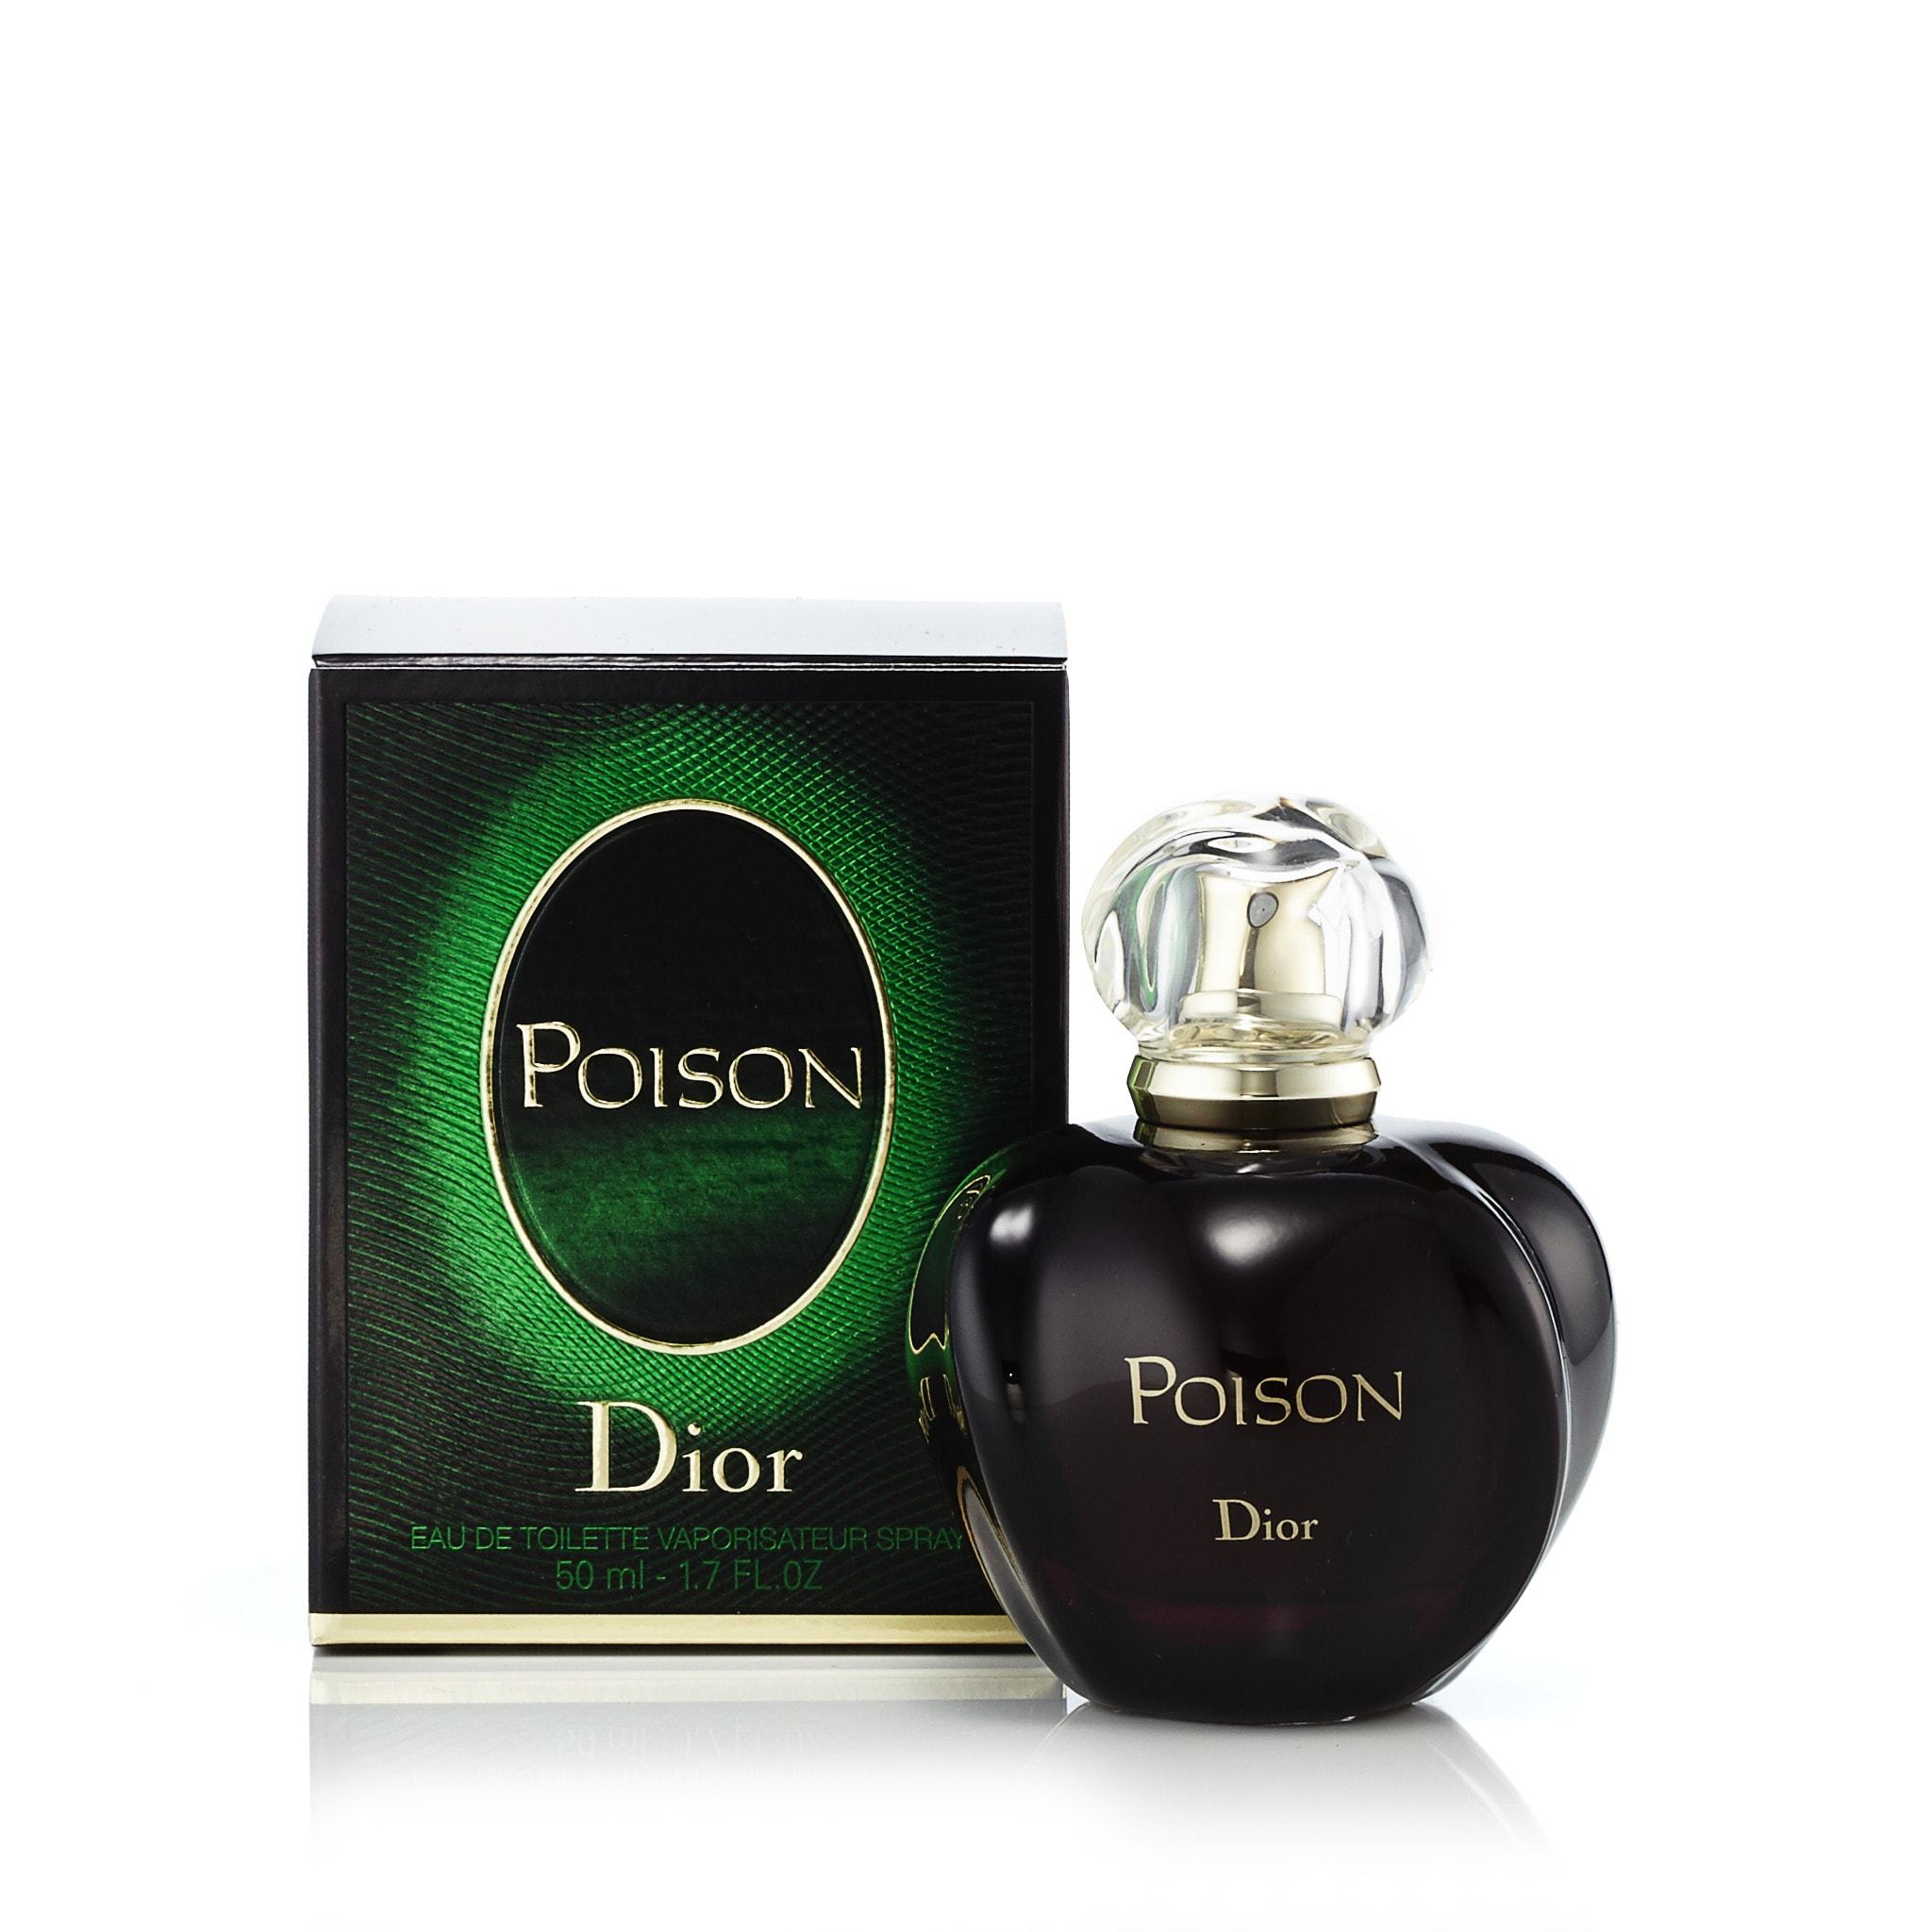  Christian Dior Miss Dior Eau De Parfum Spray for Women 5.0  Ounce, 150 ml : Beauty & Personal Care